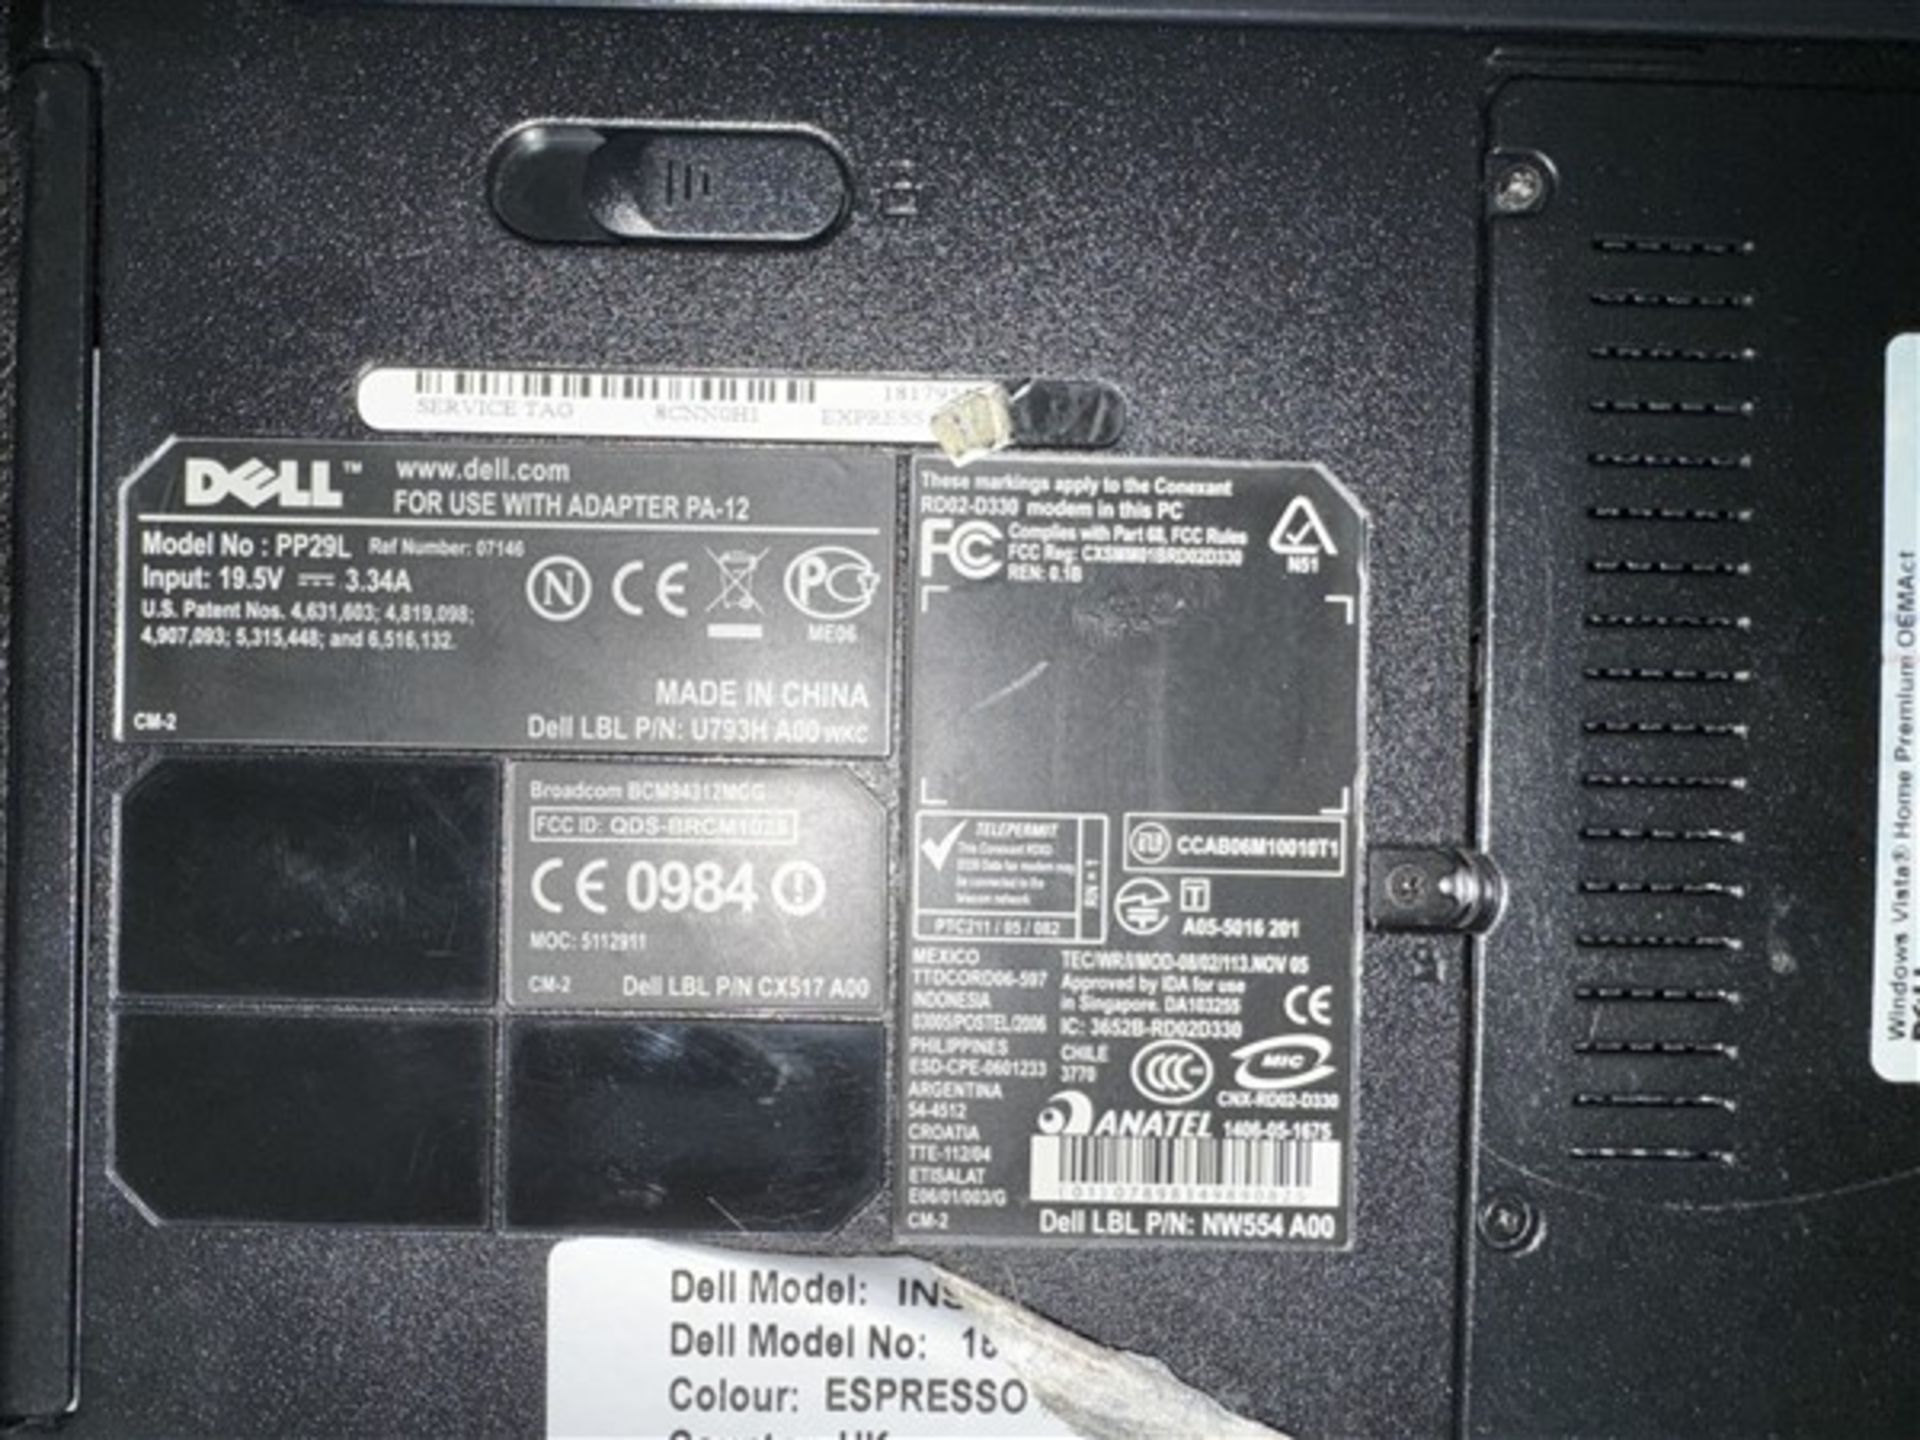 Dell Laptop Model: PP29L - Image 3 of 3